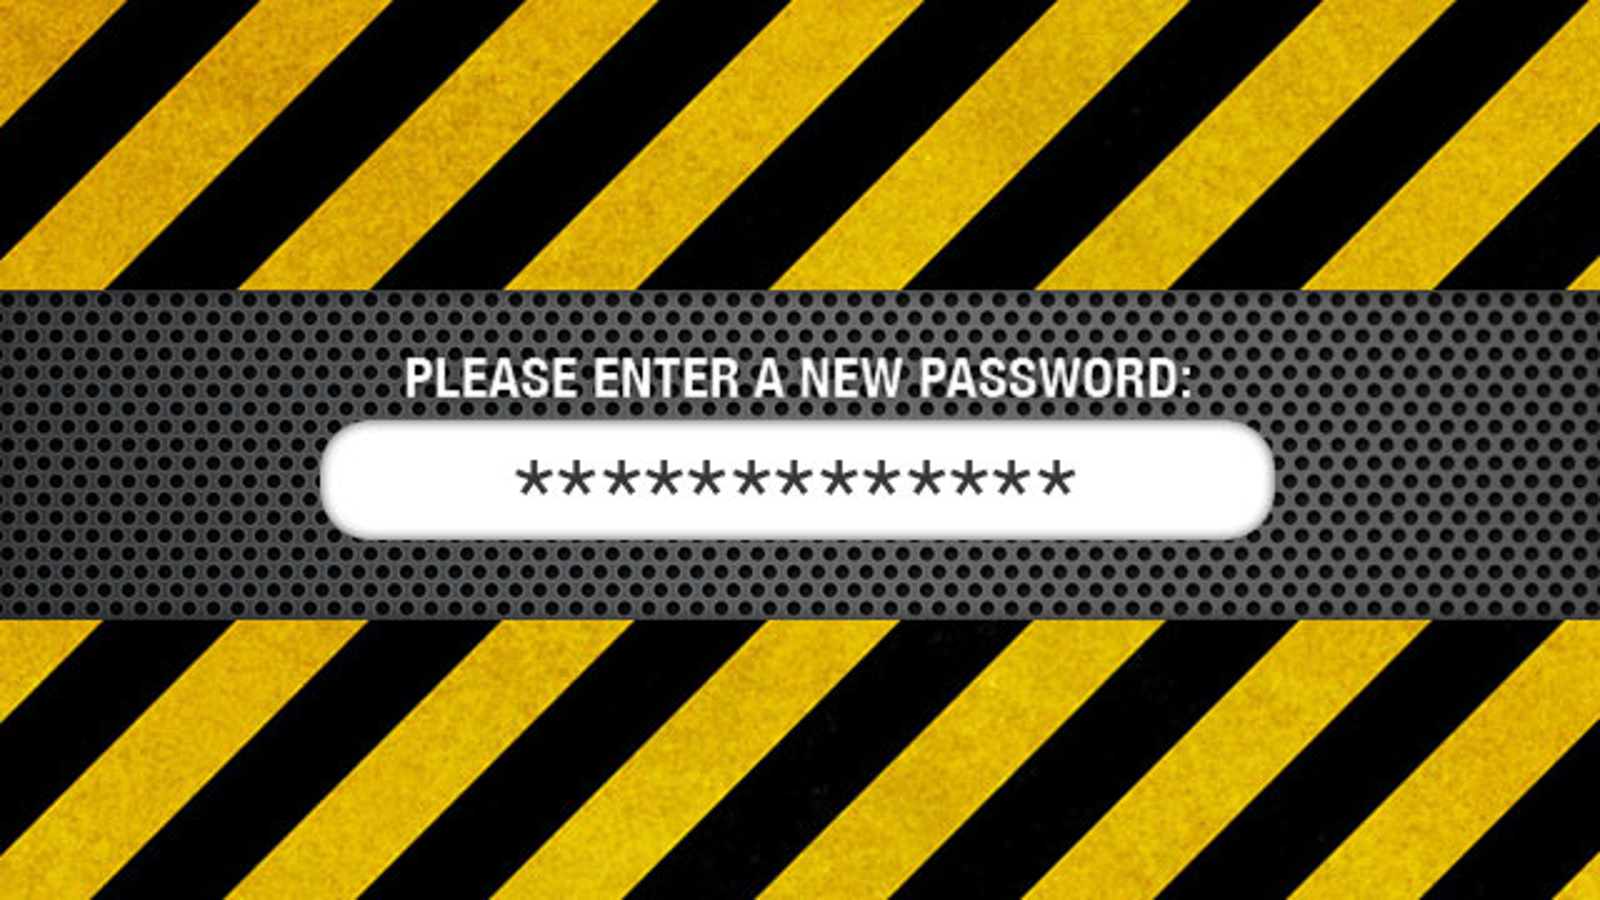 1password upgrade to 8